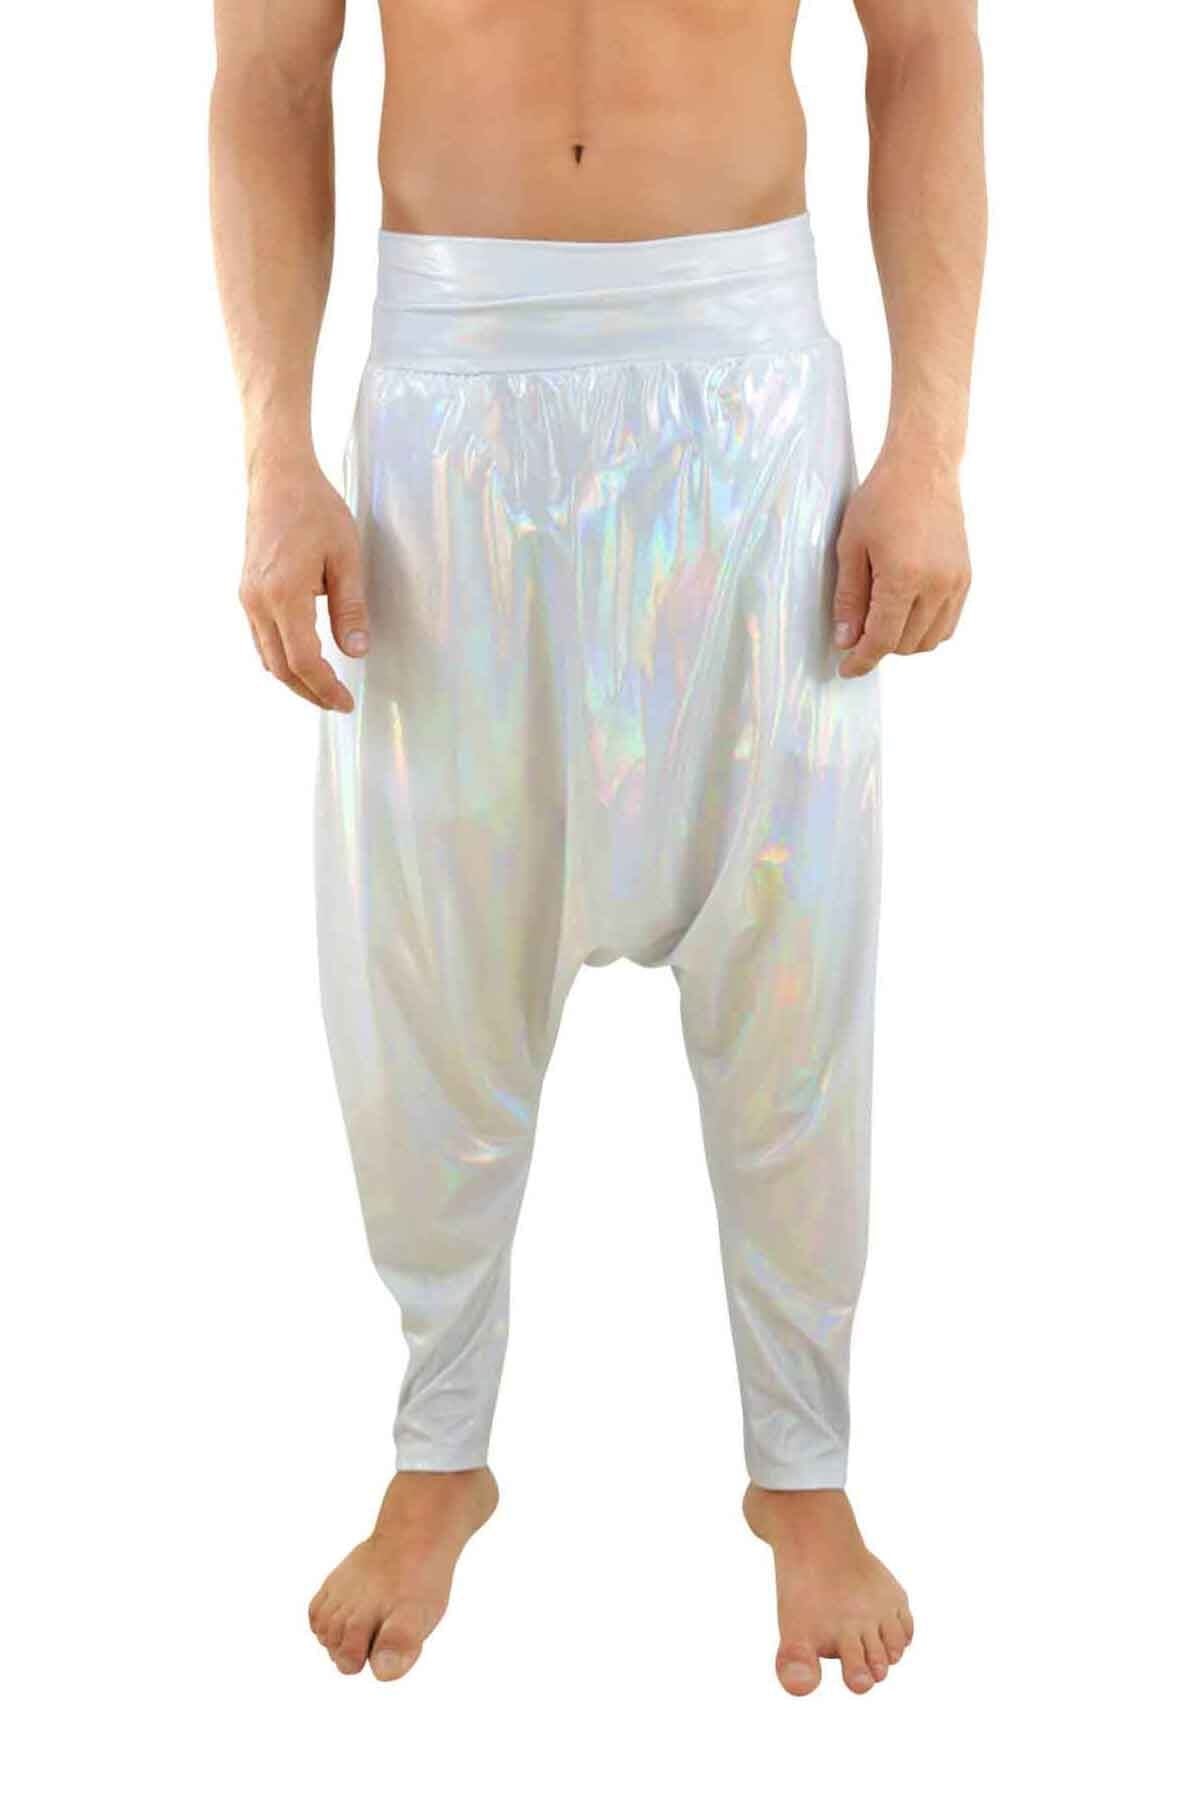 Rave Harem Pants Mens Shiny White